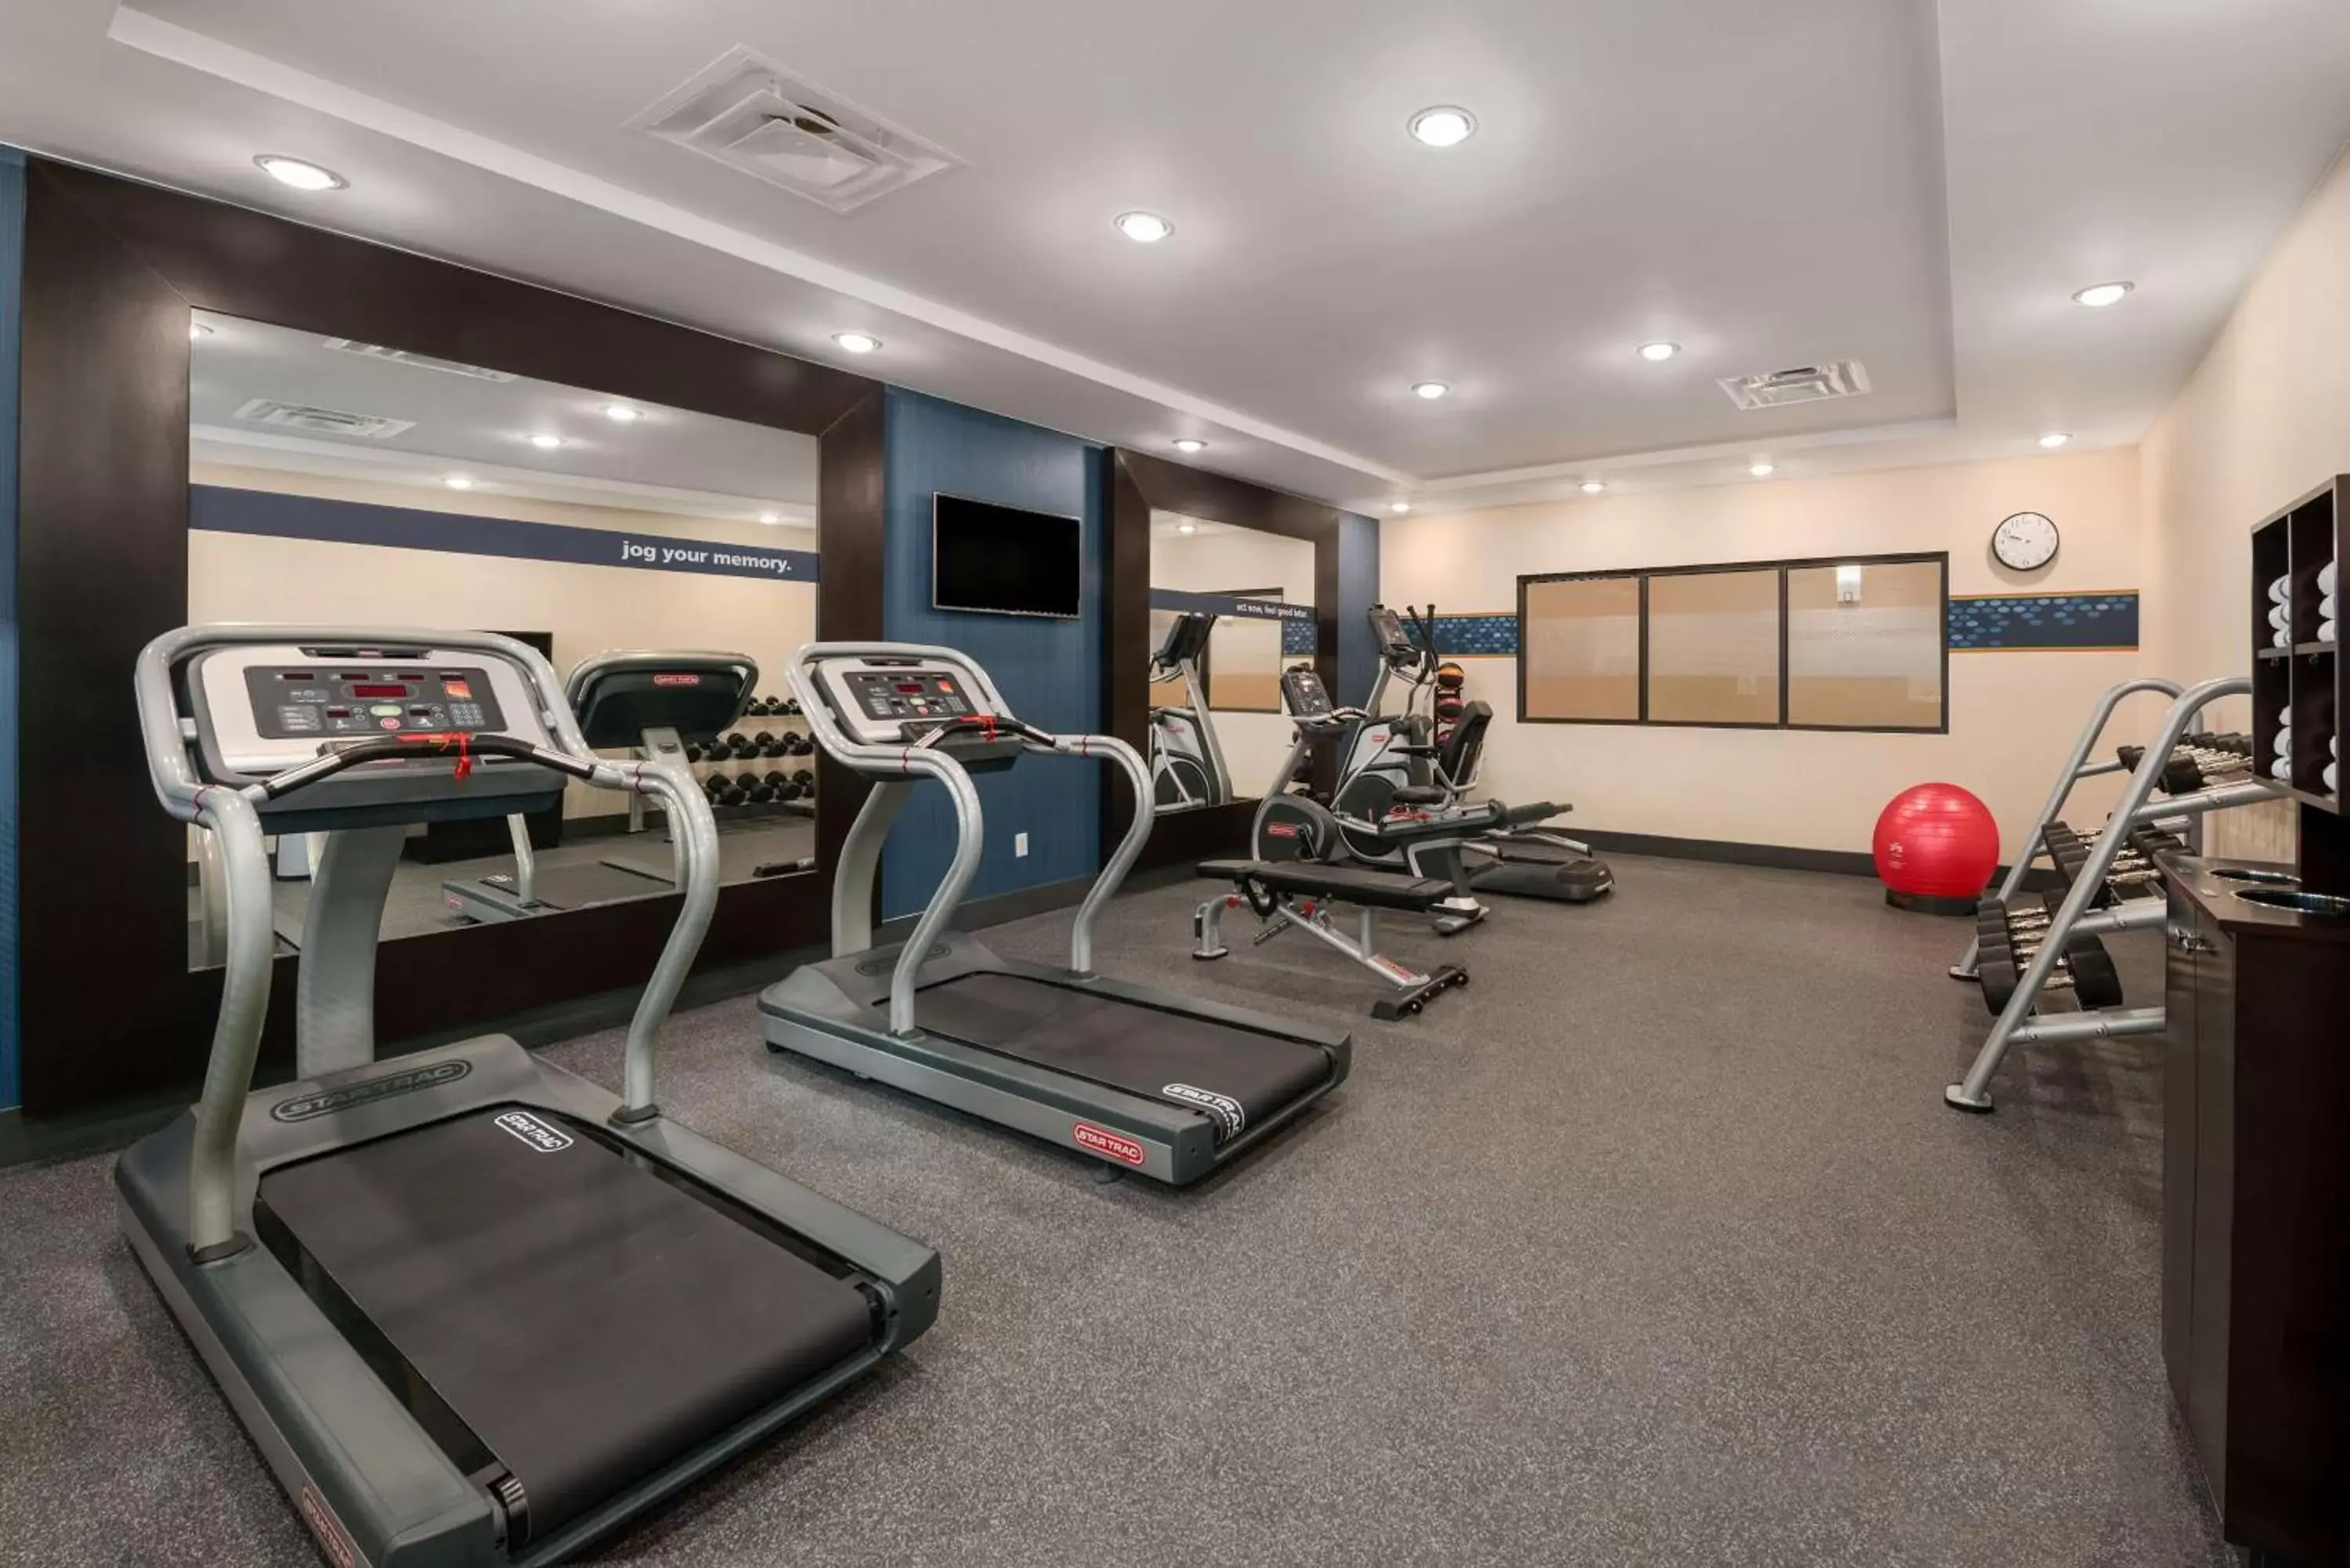 Fitness centre/facilities, Fitness Center/Facilities in Hampton Inn & Suites - Lavonia, GA